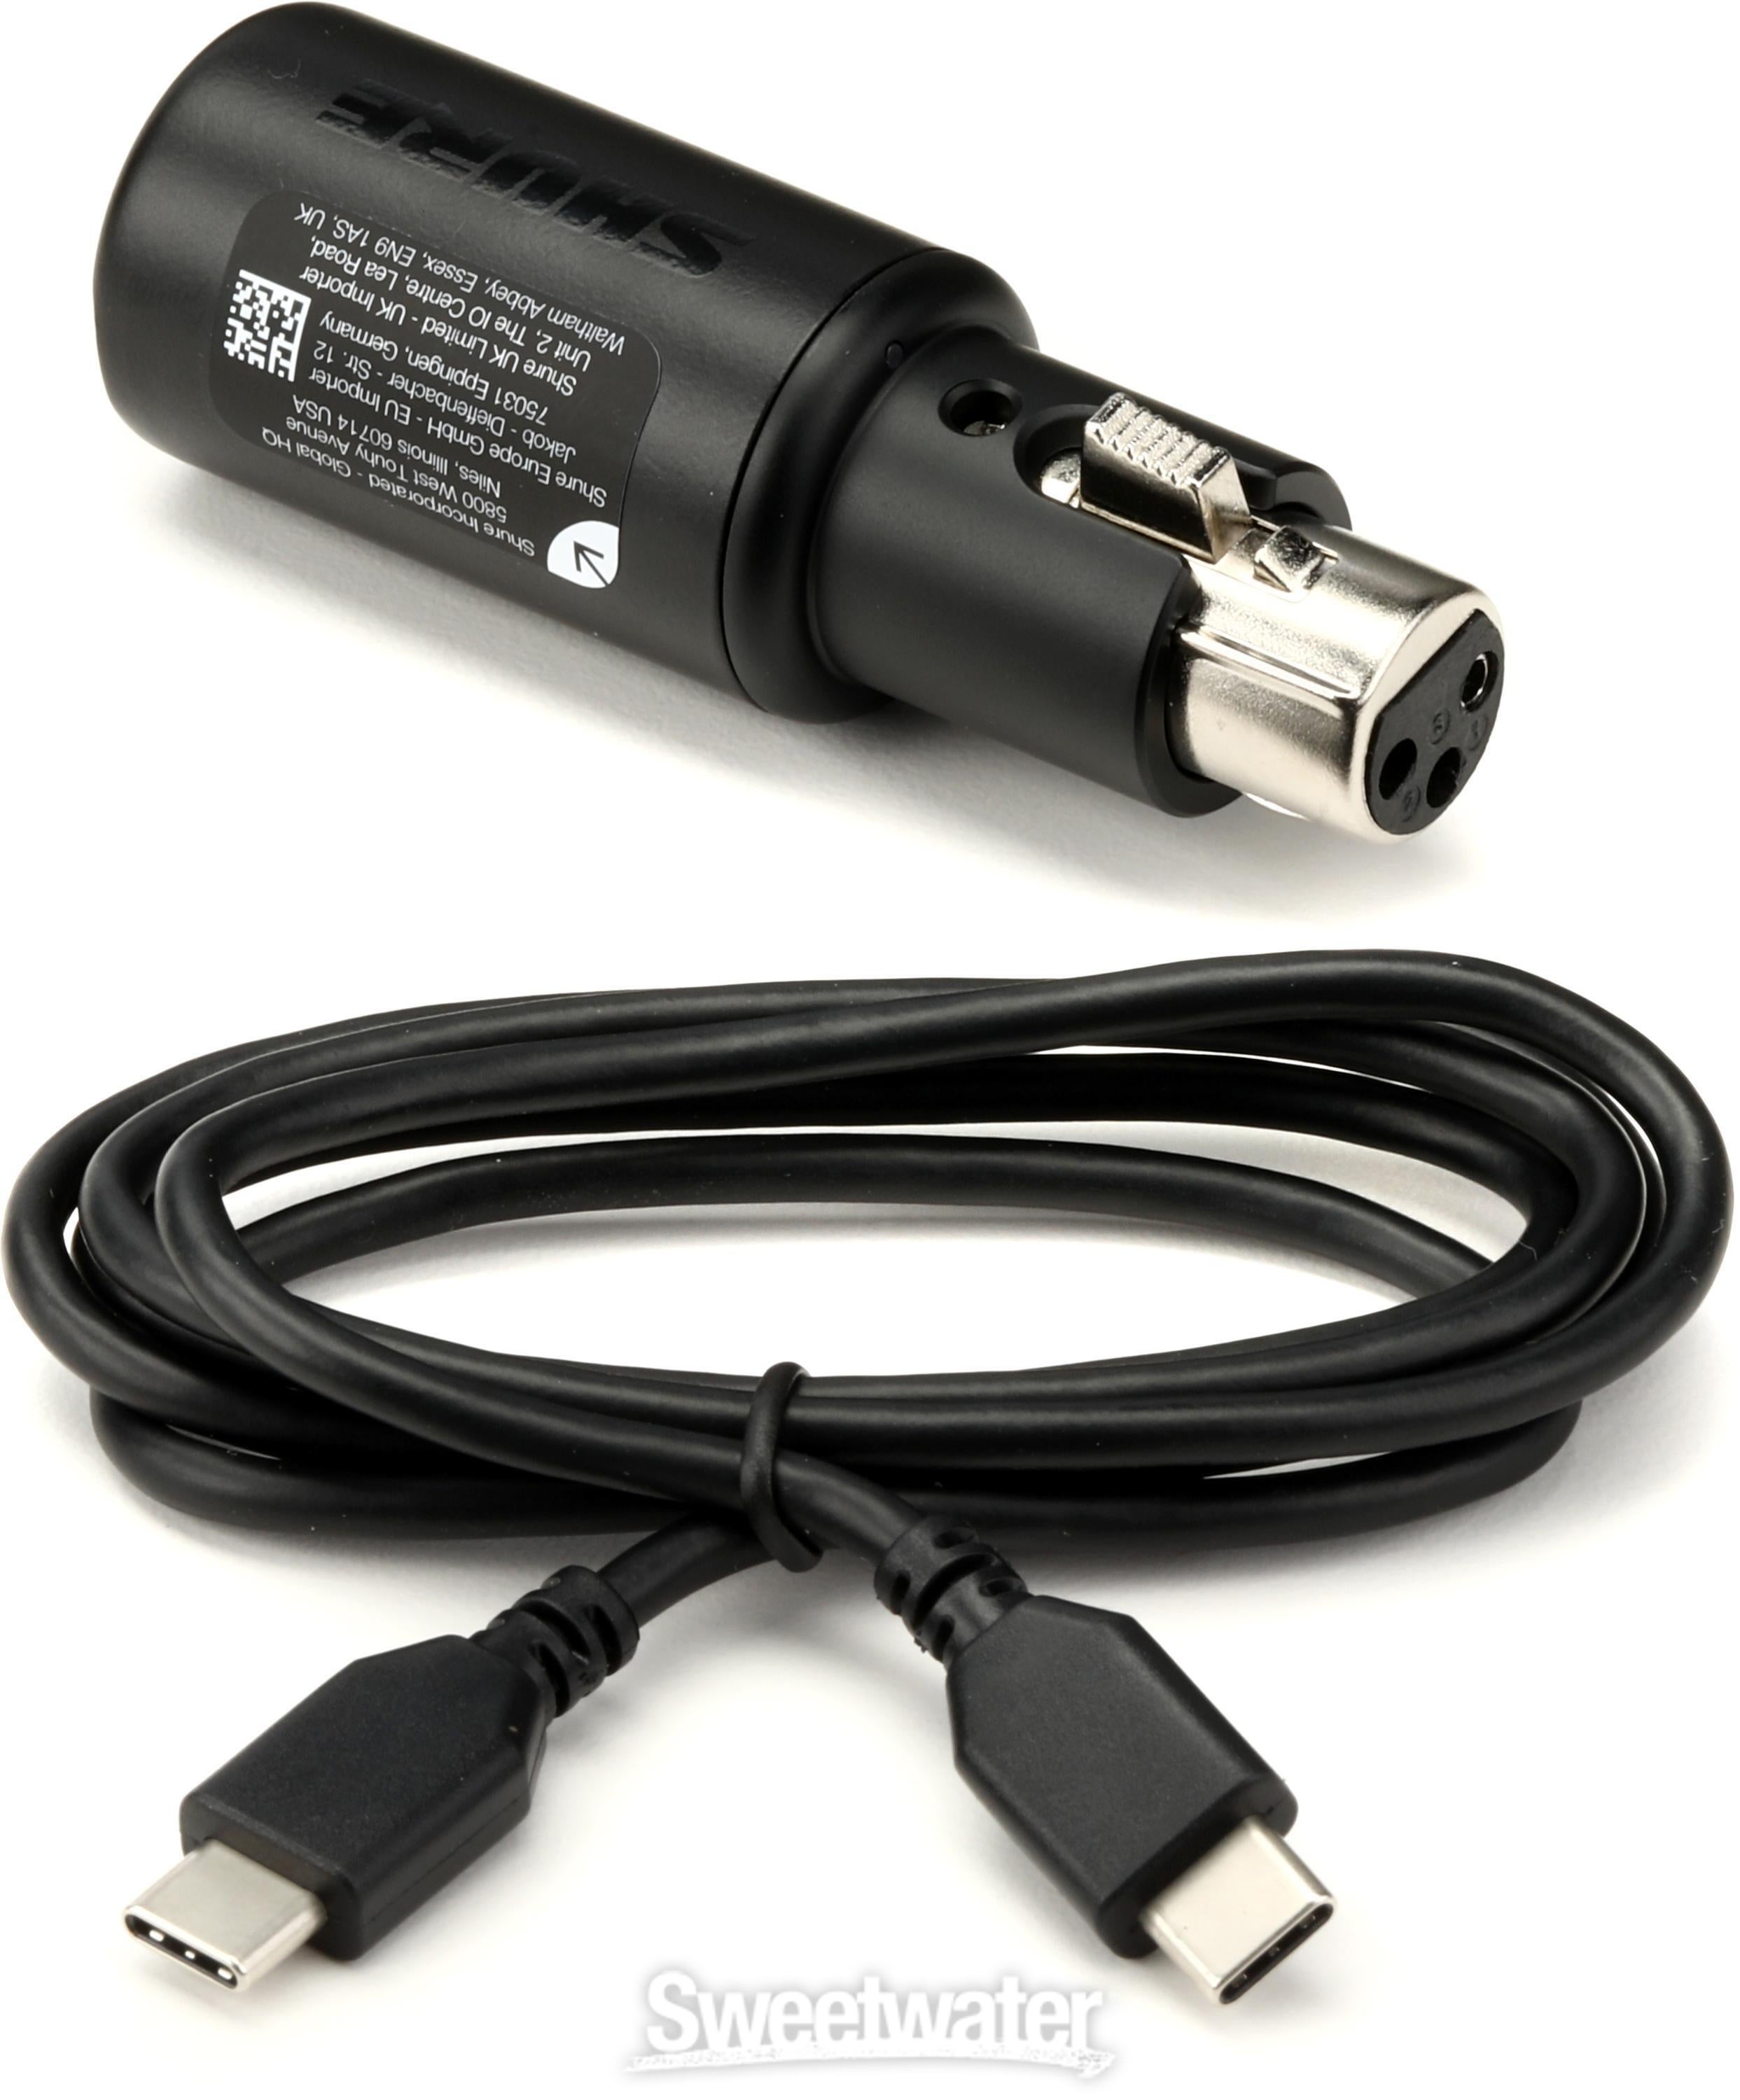 Shure MVX2u XLR to USB Audio Interface | Sweetwater